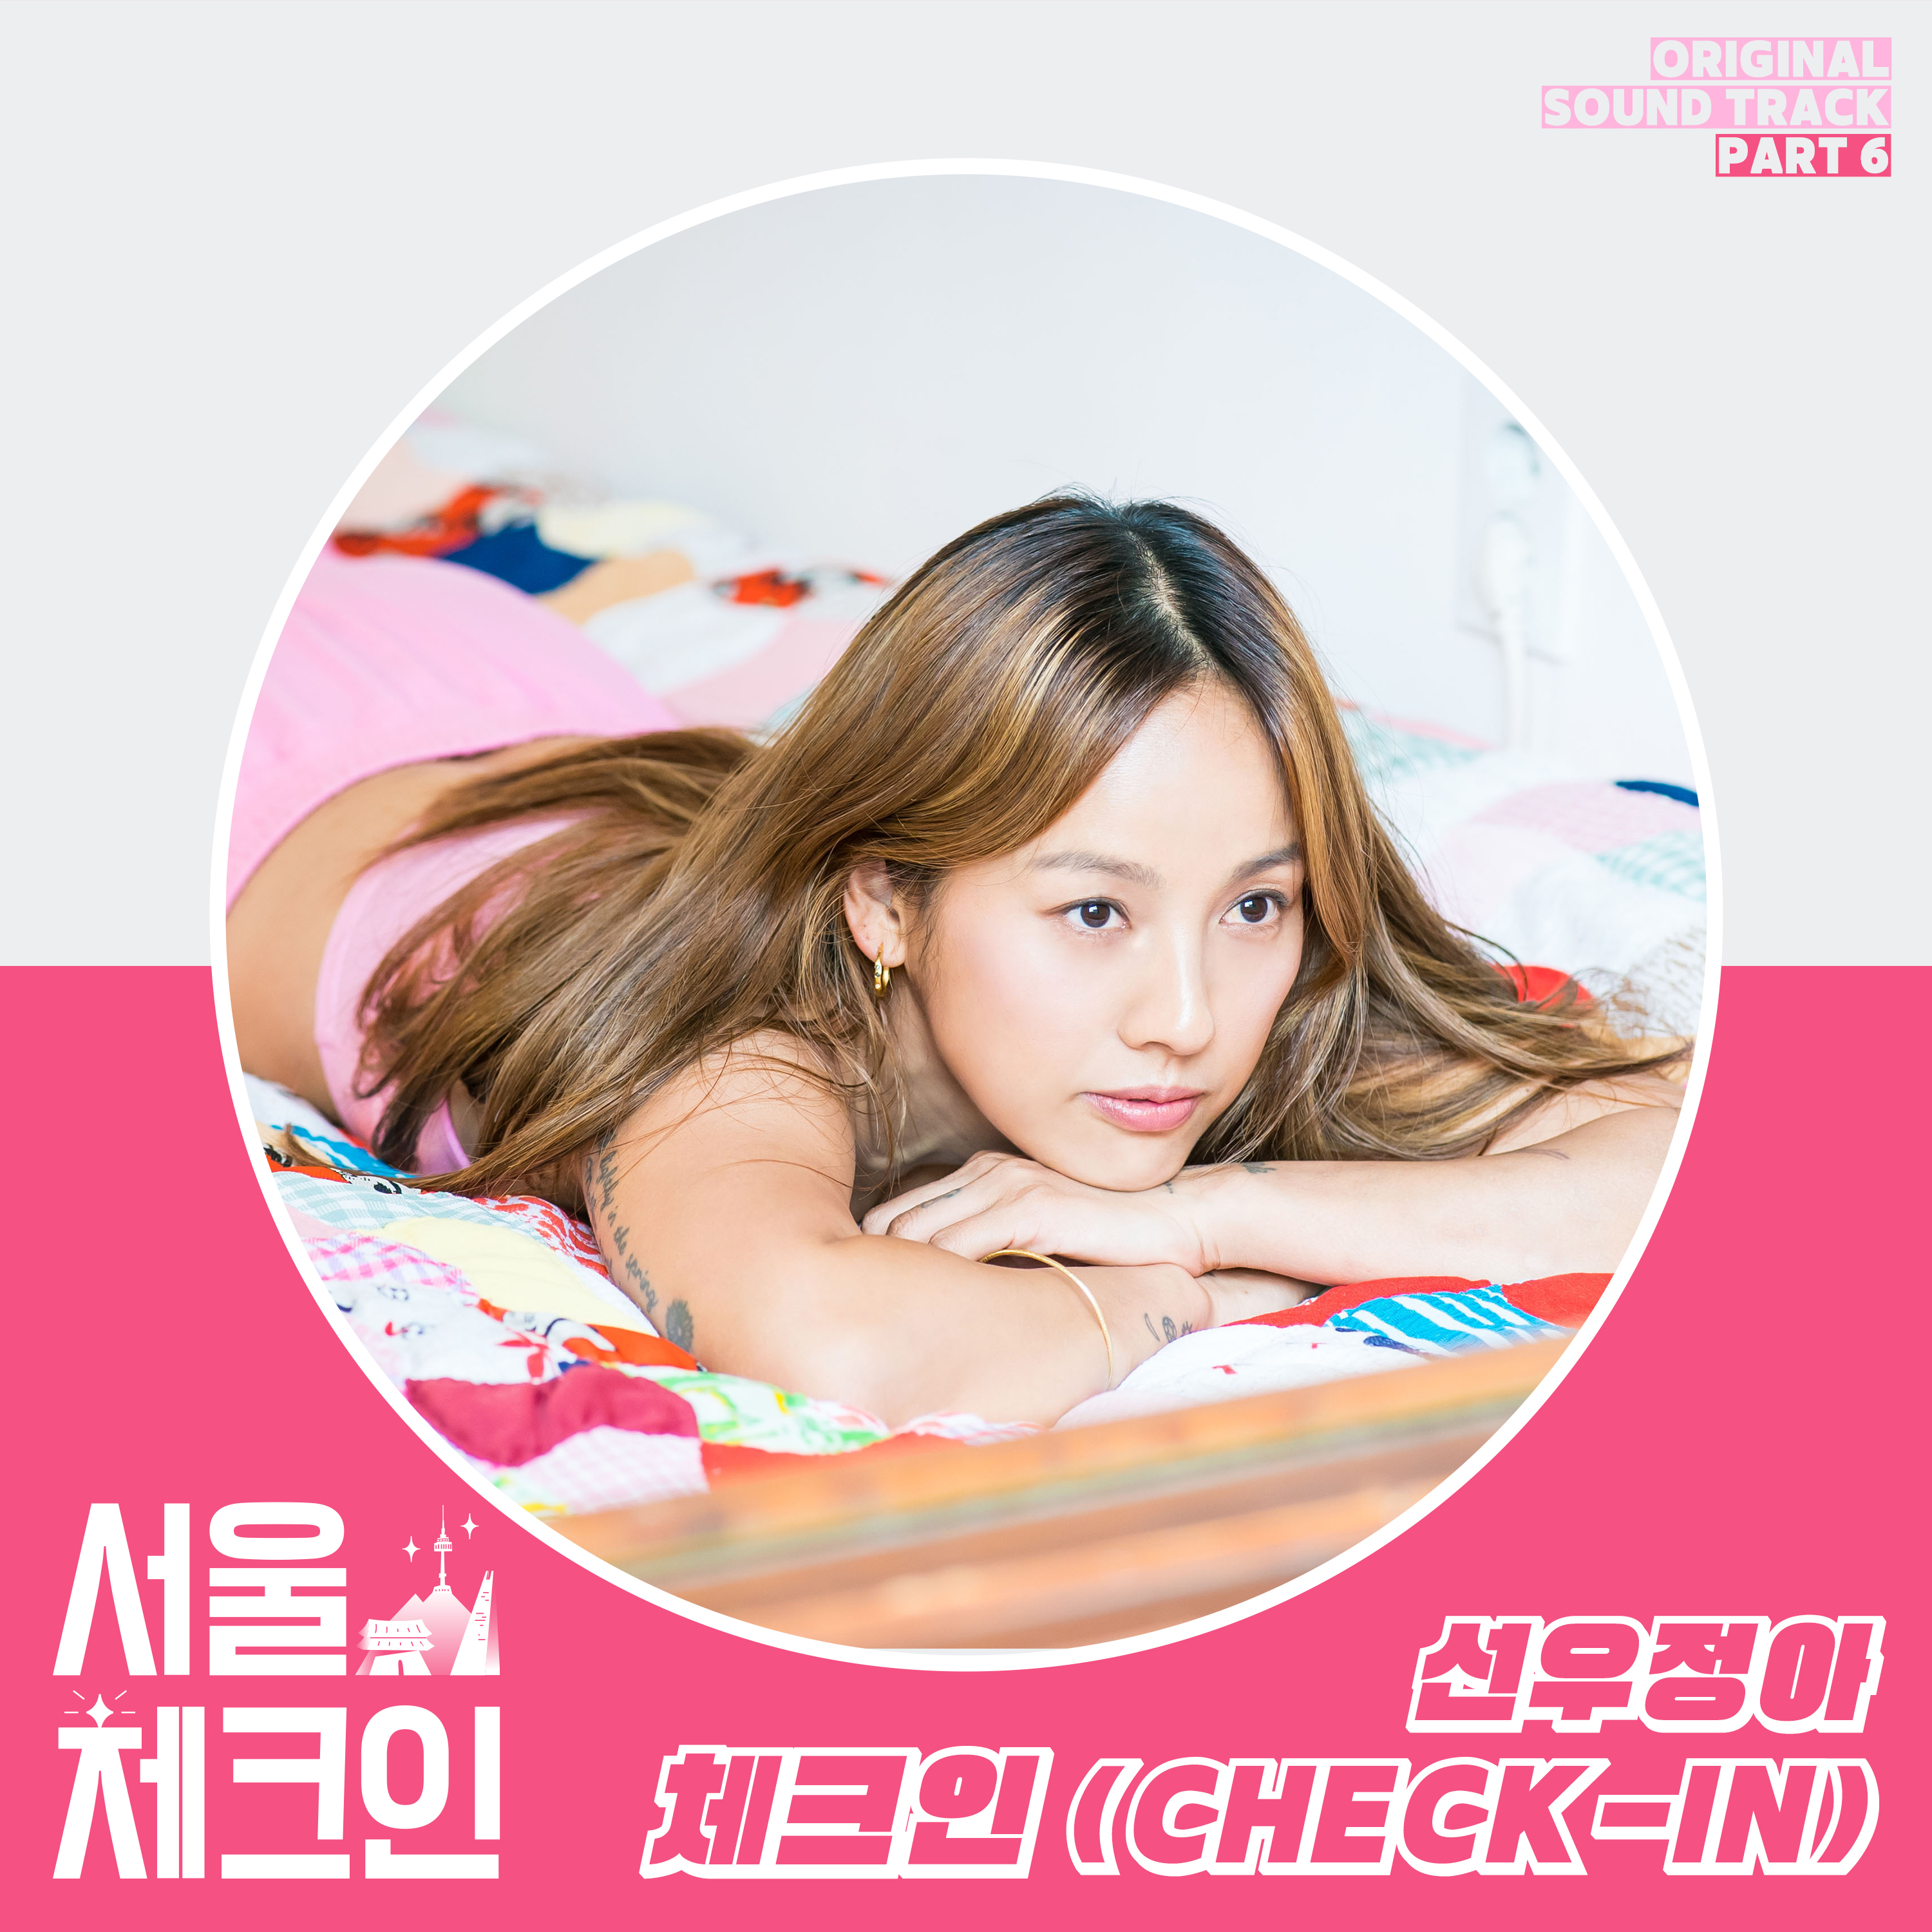 [情報] Seoul Check In OST Pt.6 - 鮮于貞娥